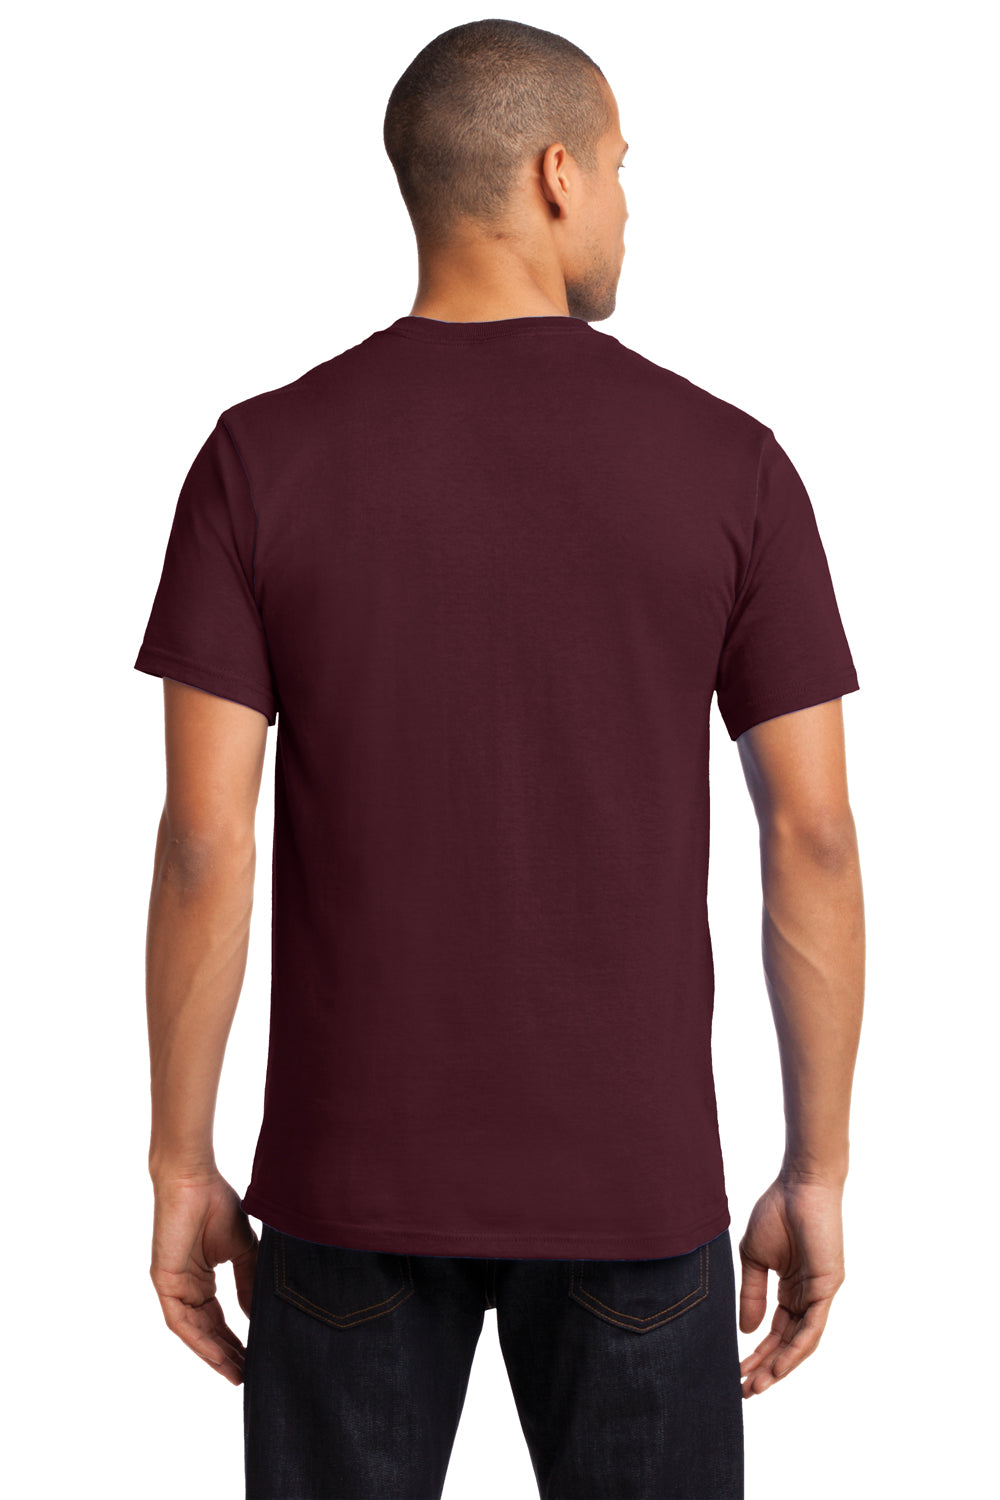 Port & Company PC61P Mens Essential Short Sleeve Crewneck T-Shirt w/ Pocket Maroon Back